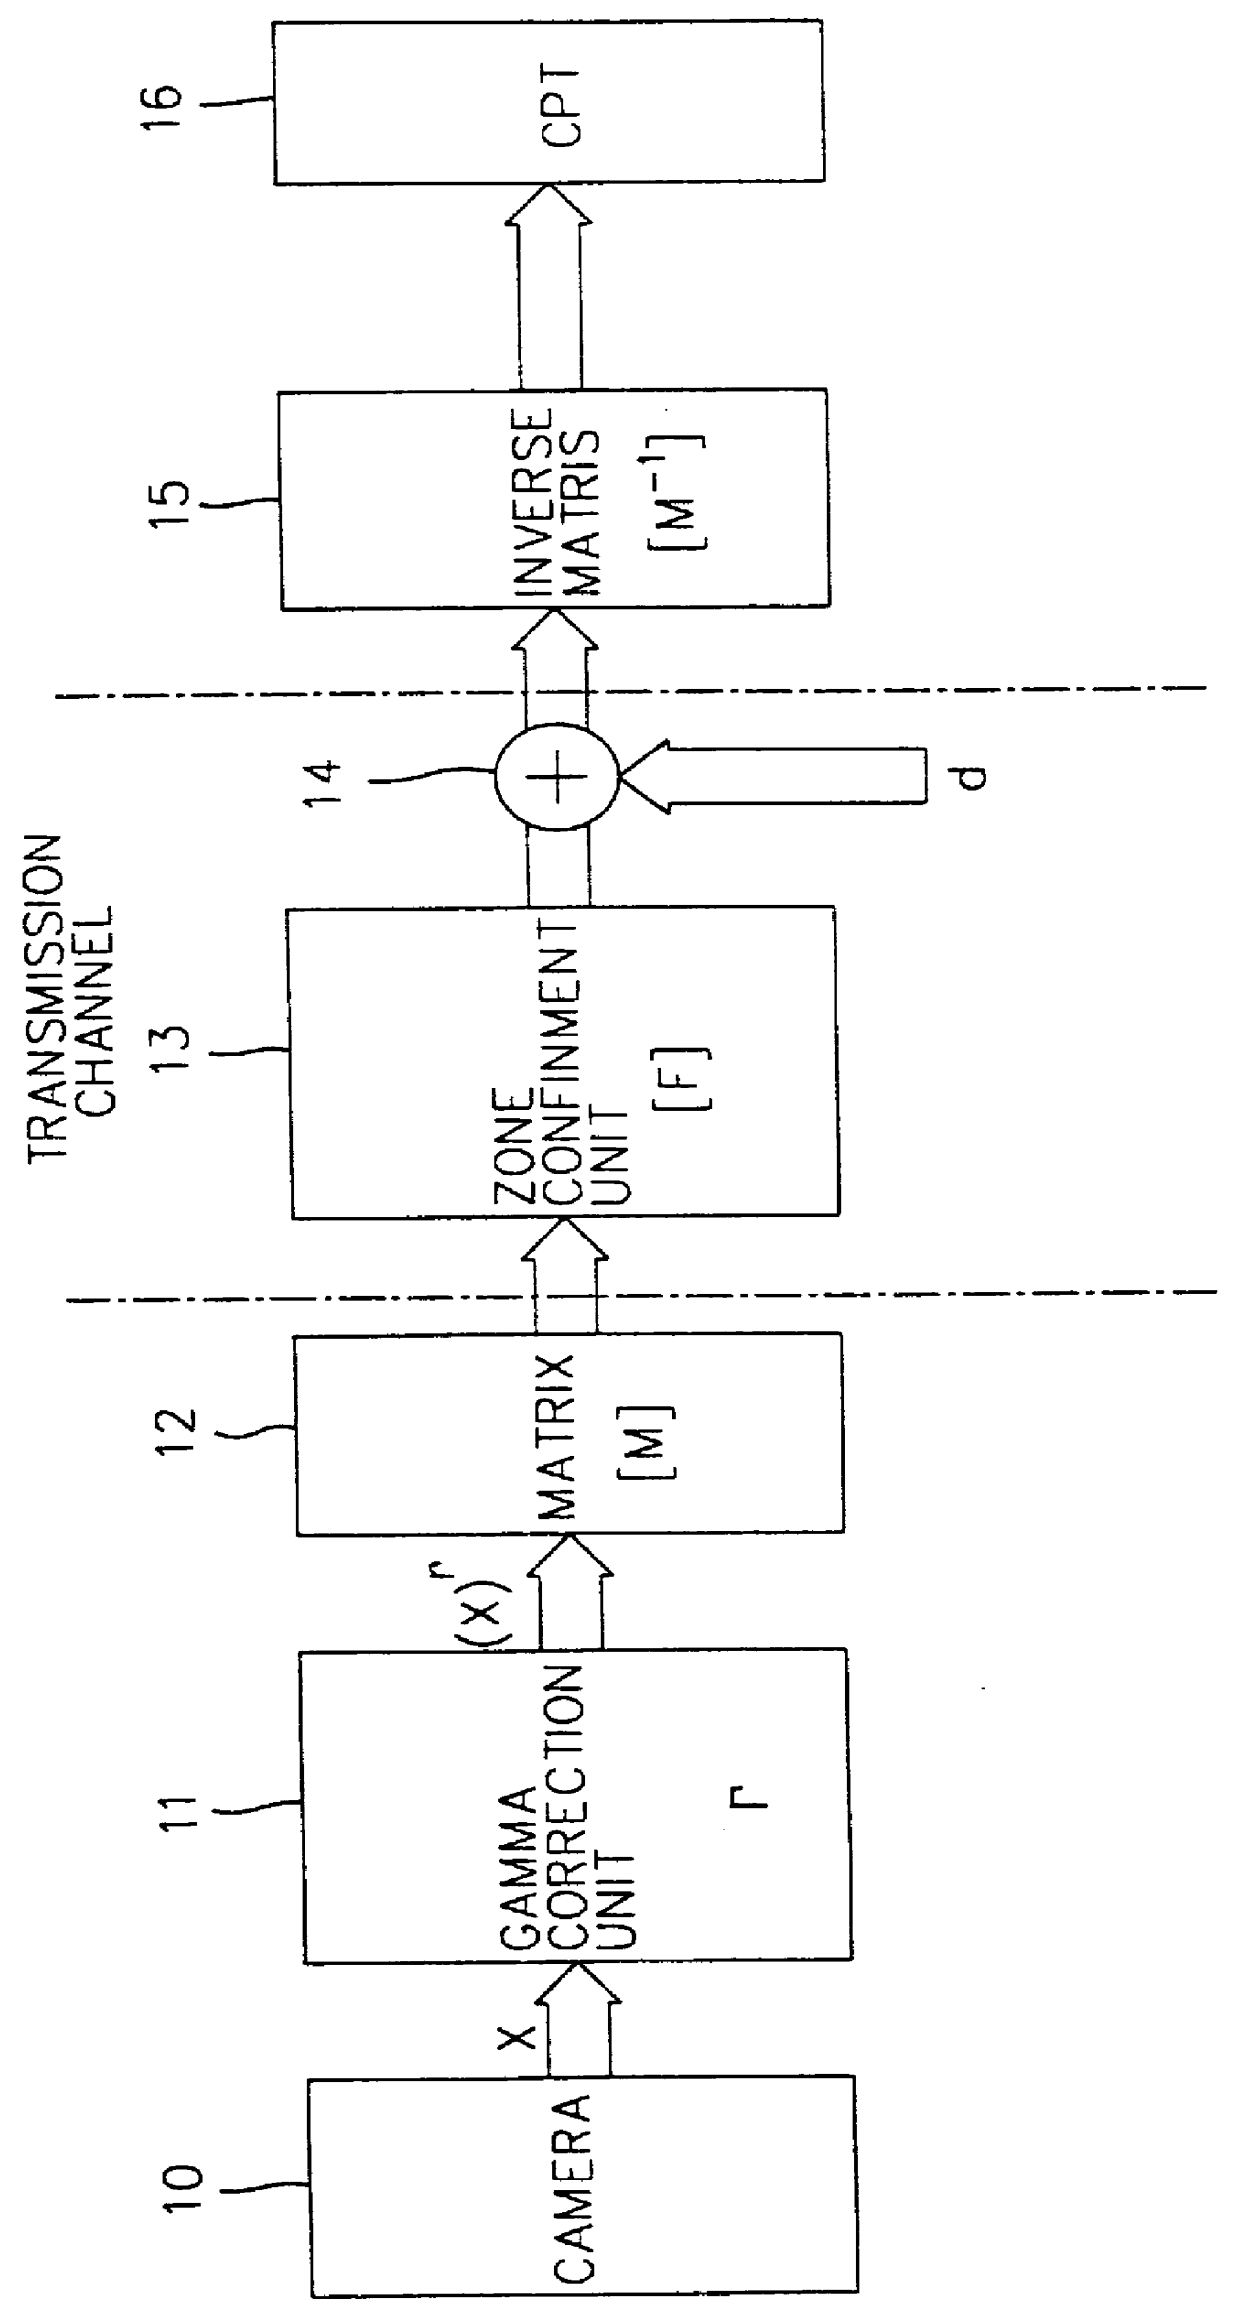 Gamma correction circuit for television receiver